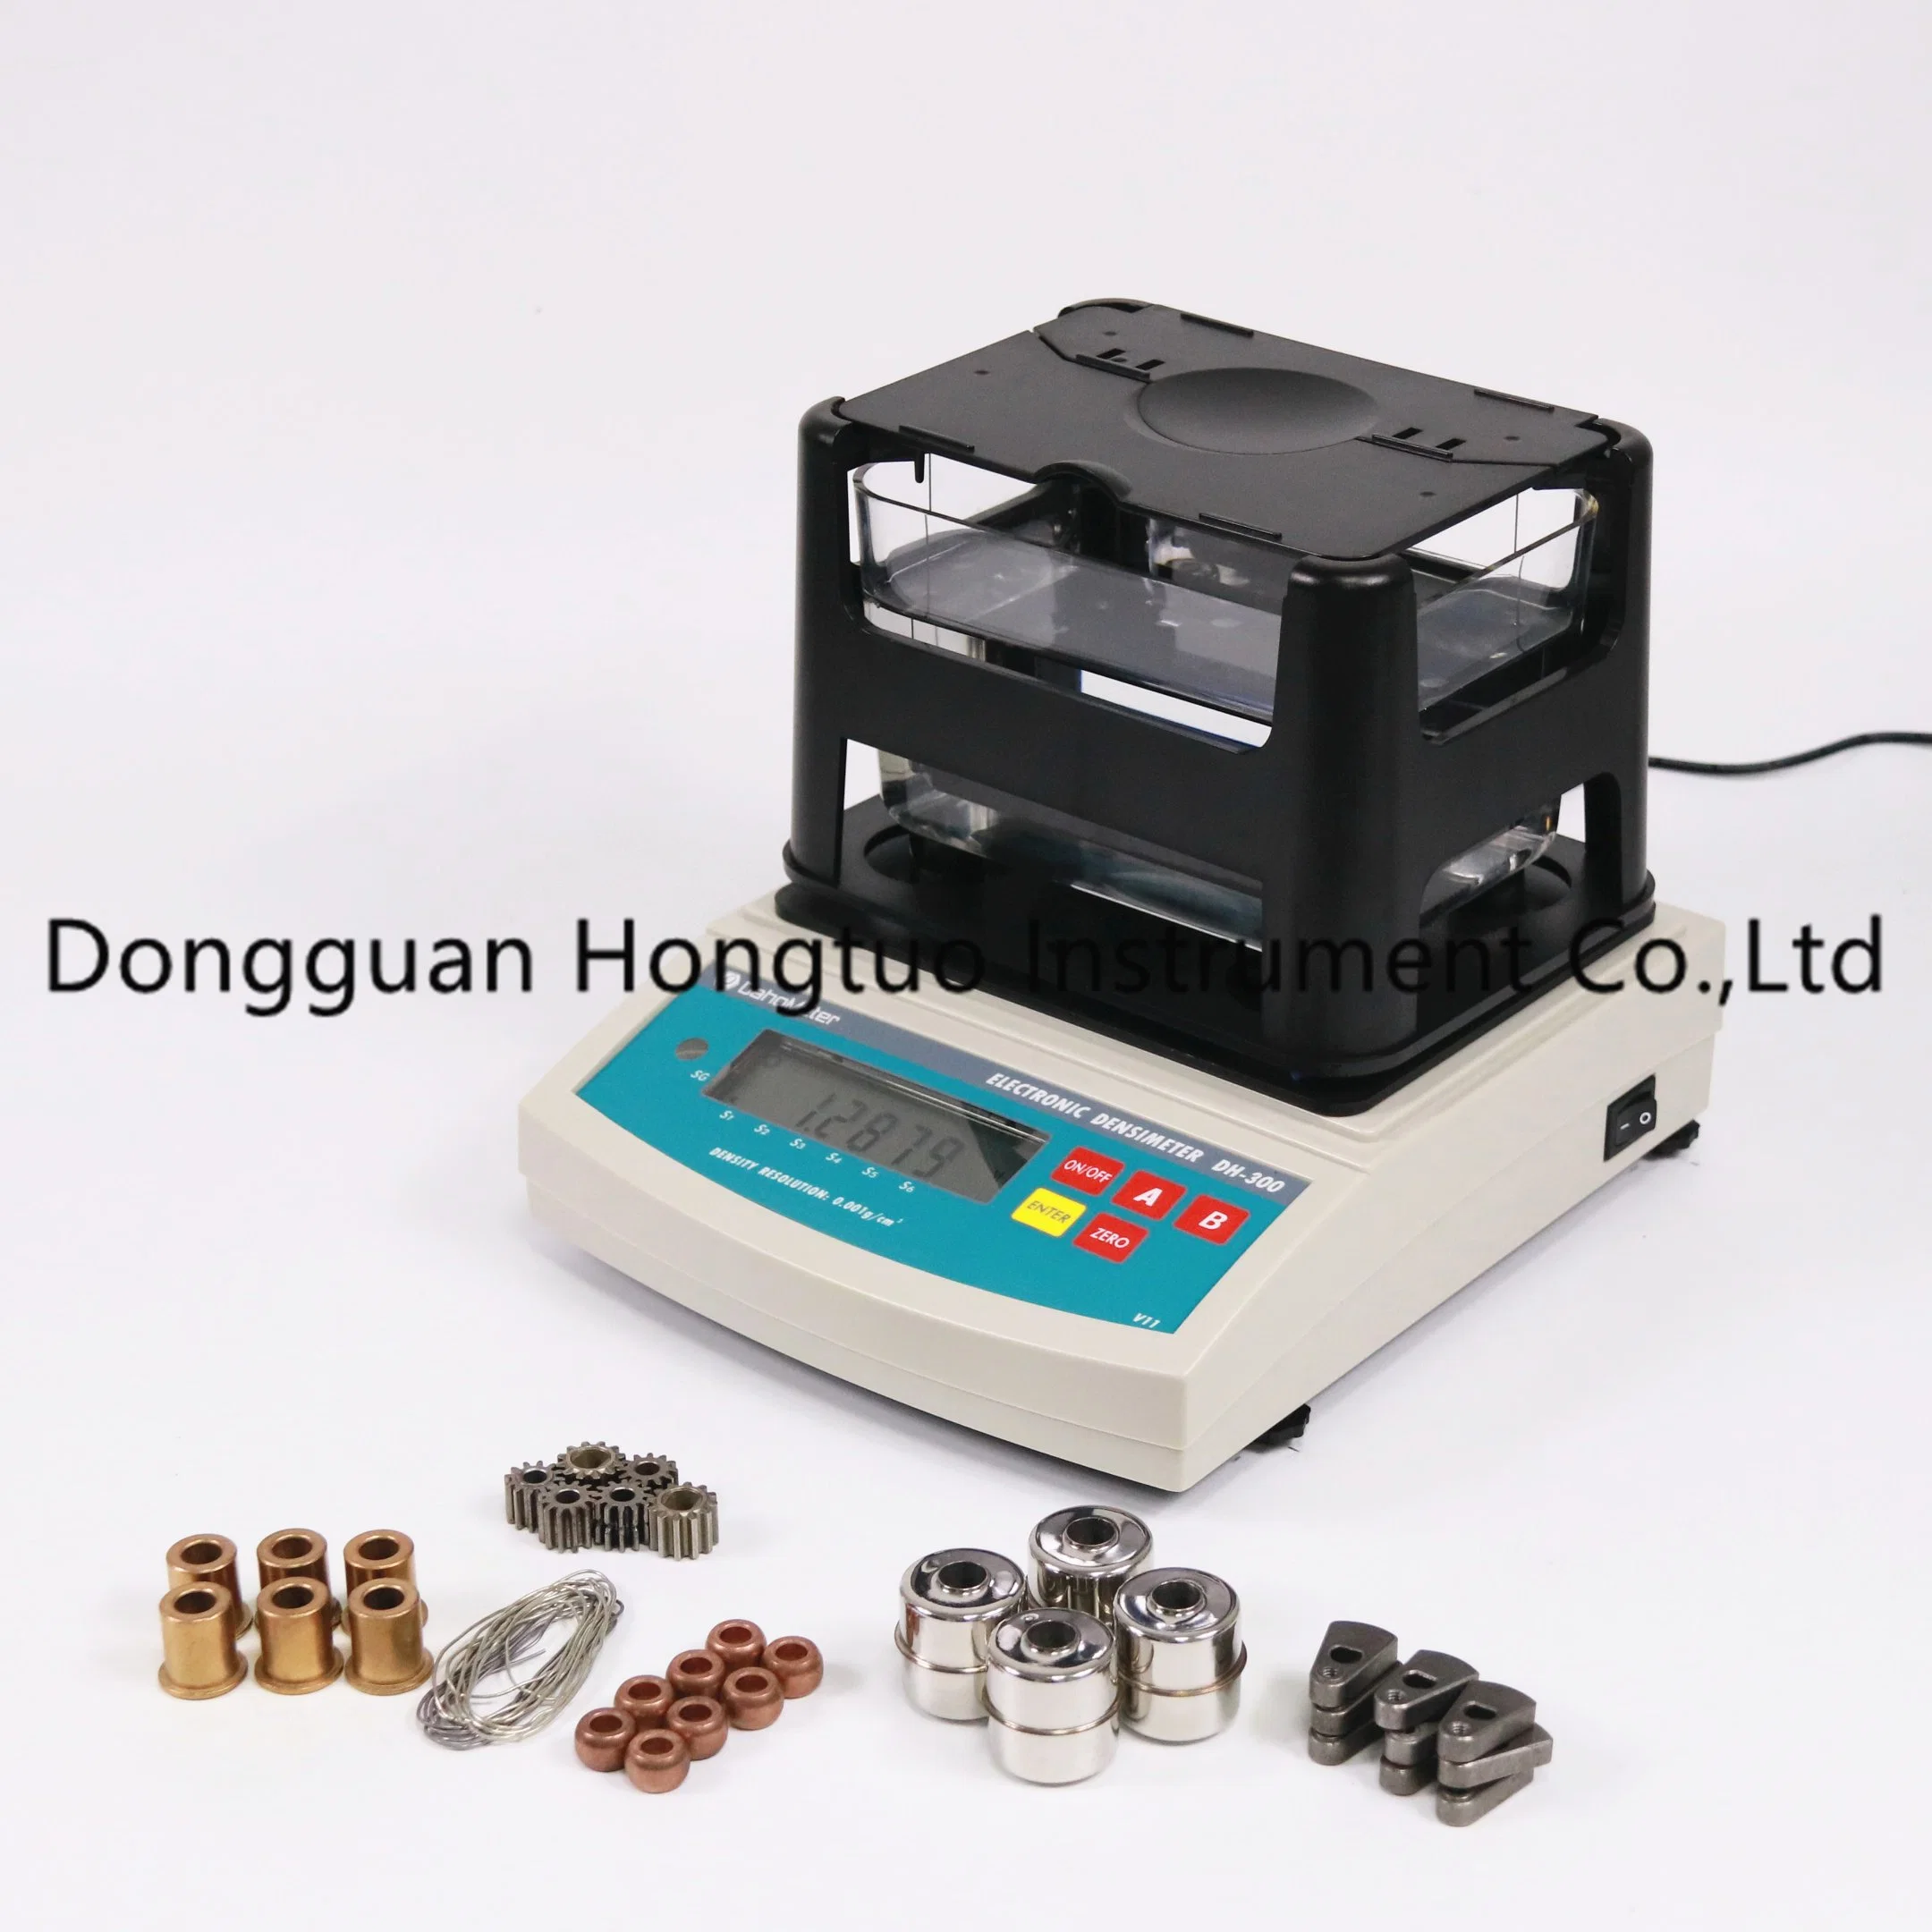 DH-1200 Professional Leading Manufacturer Electronic Digital Solids Density Meter